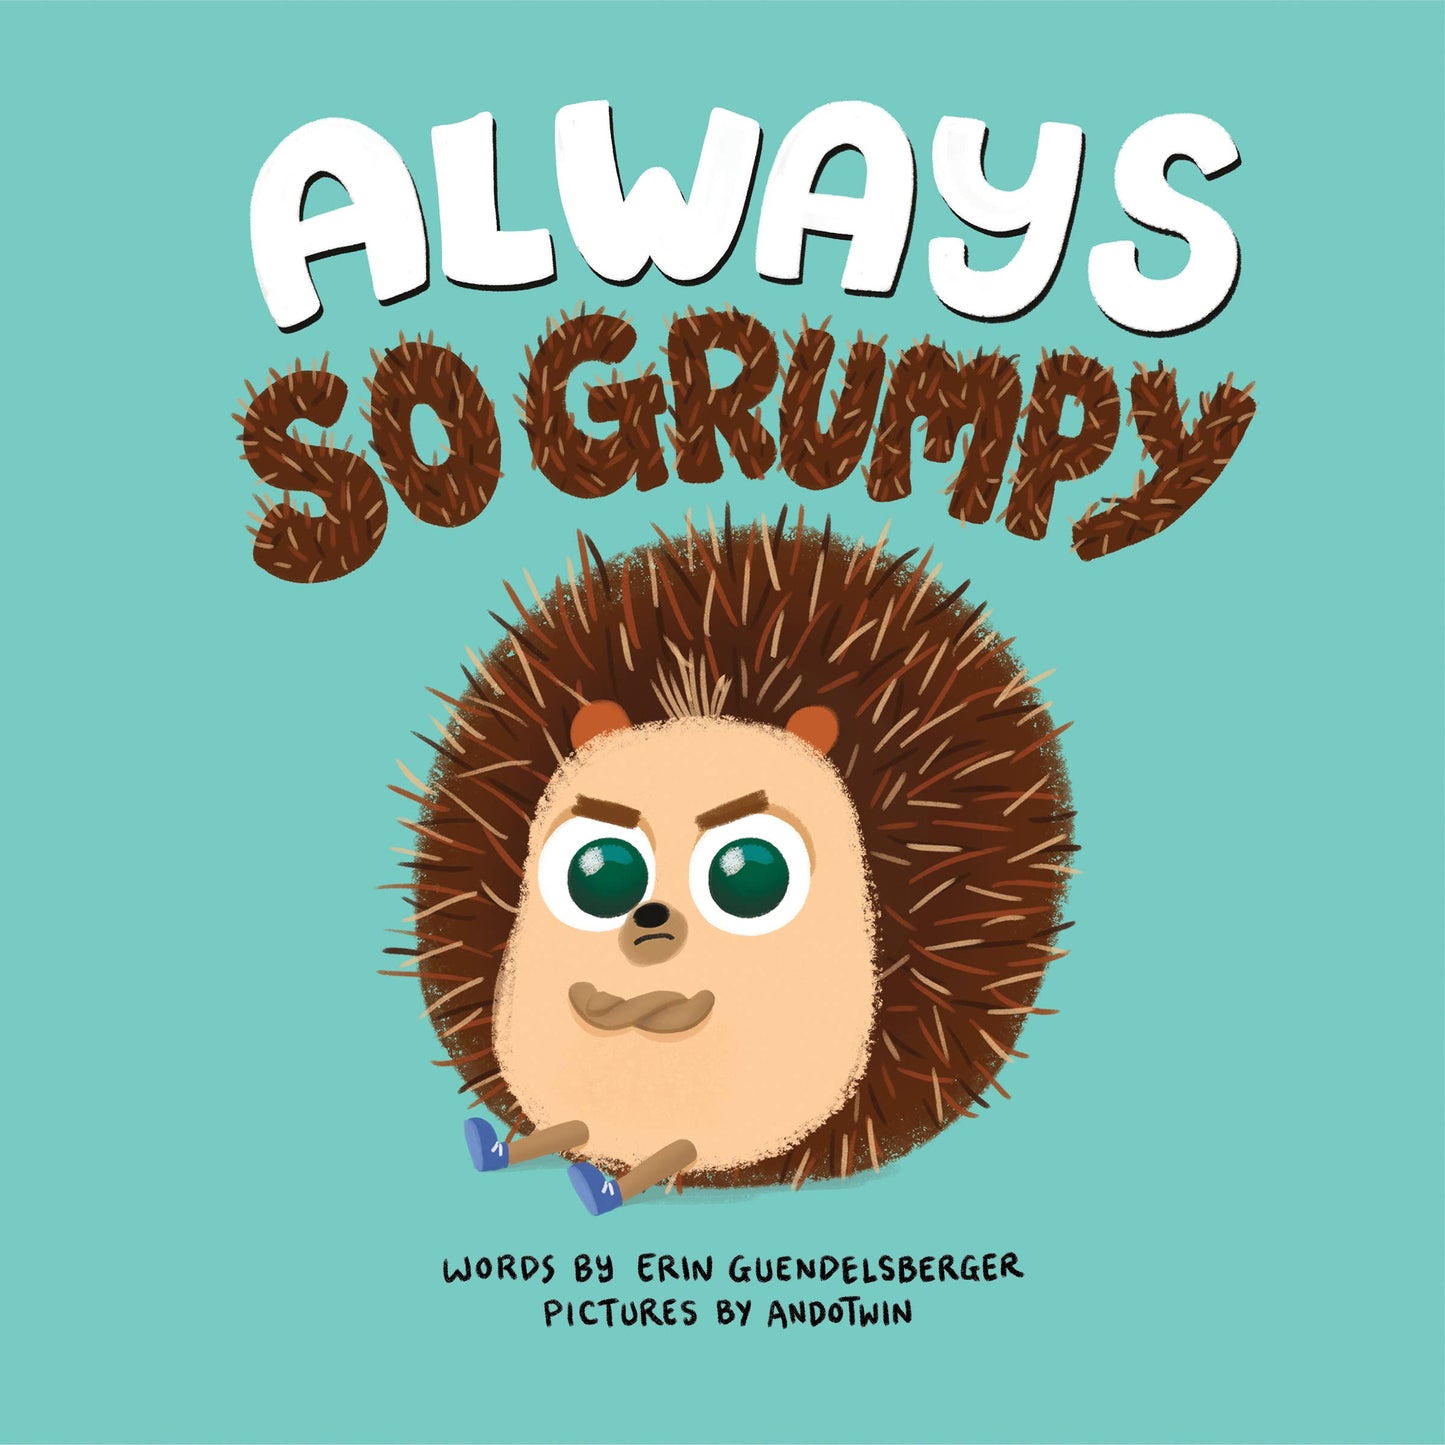 Always So Grumpy Book